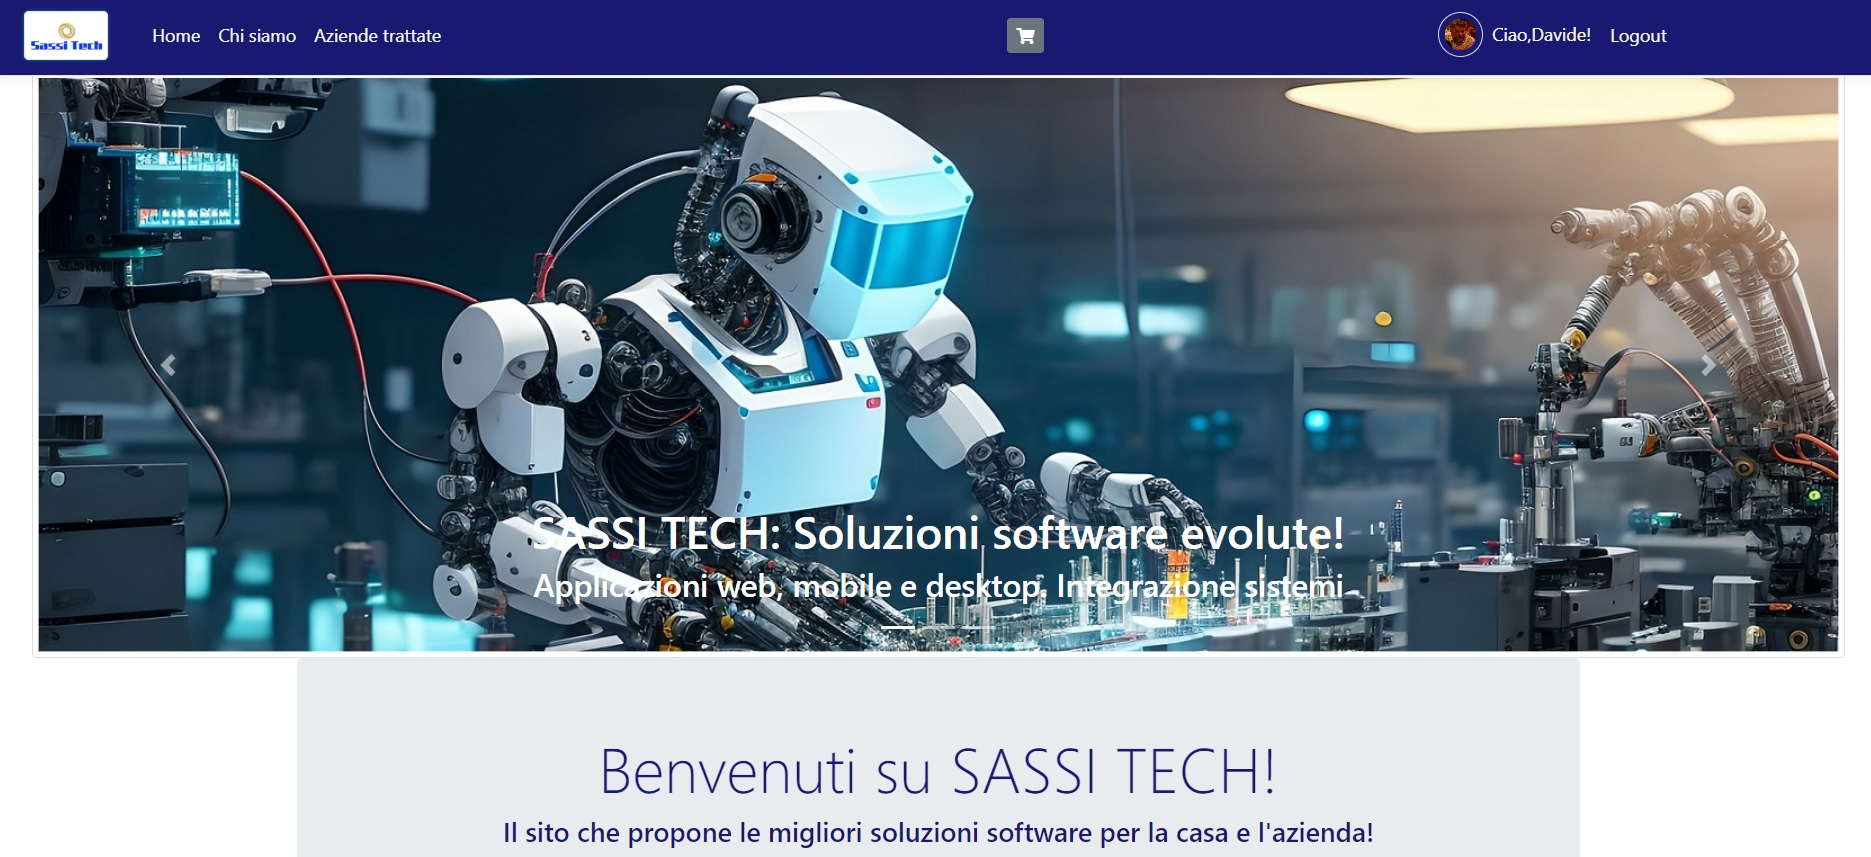 Sassitech1.jpg